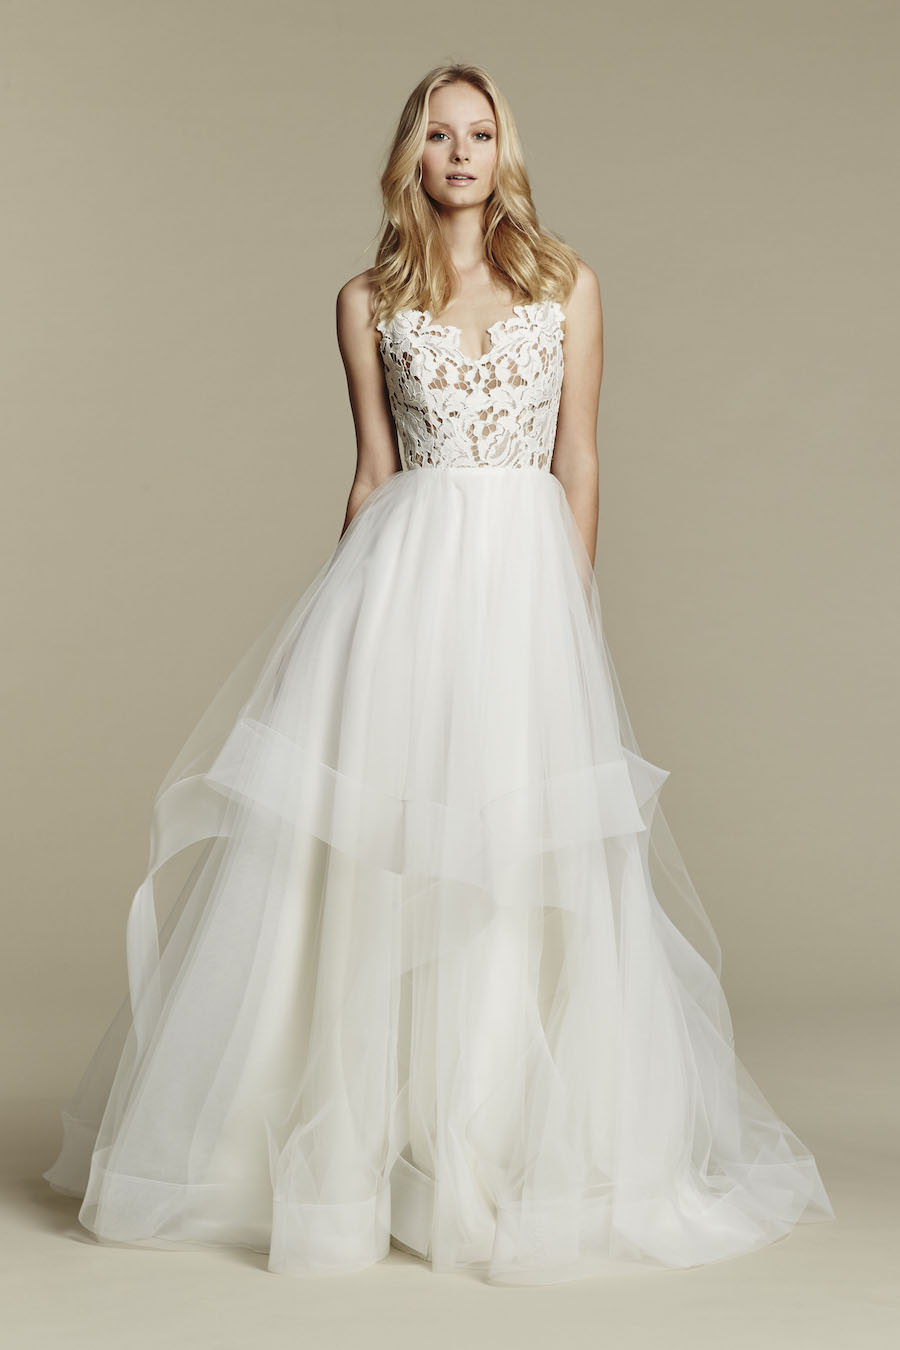 Blush by Hayley Paige Lace Wedding Dress from Blush Bridal Sarasota